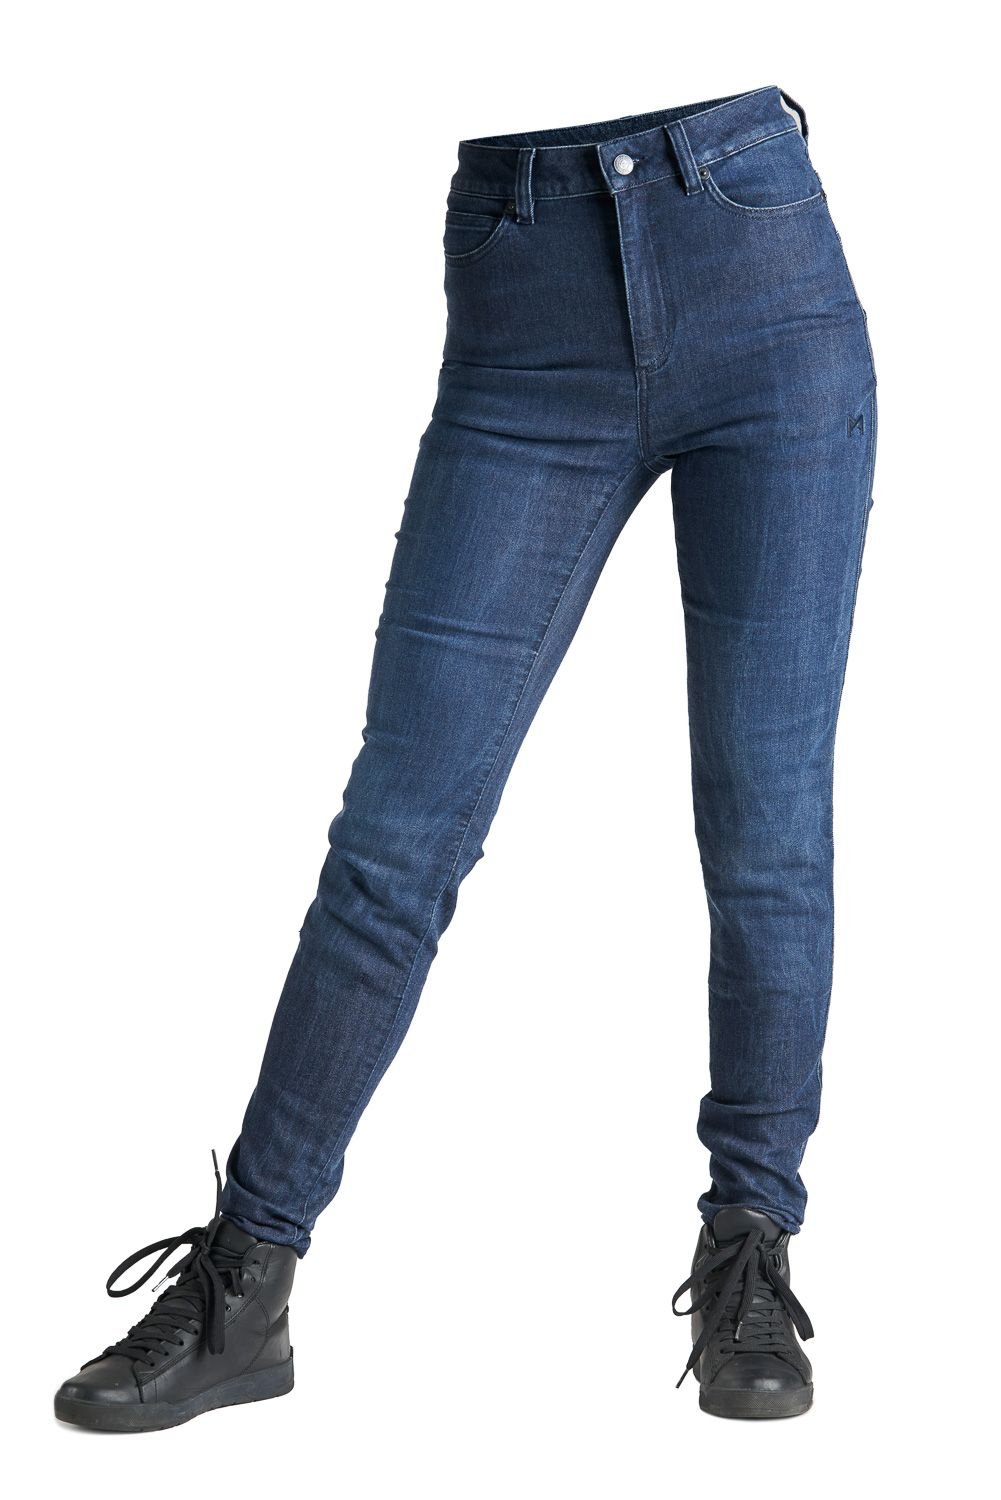 Image of Pando Moto Kusari Cor 02 Women Motorcycle Jeans Skinny-Fit Cordura Talla W31/L32